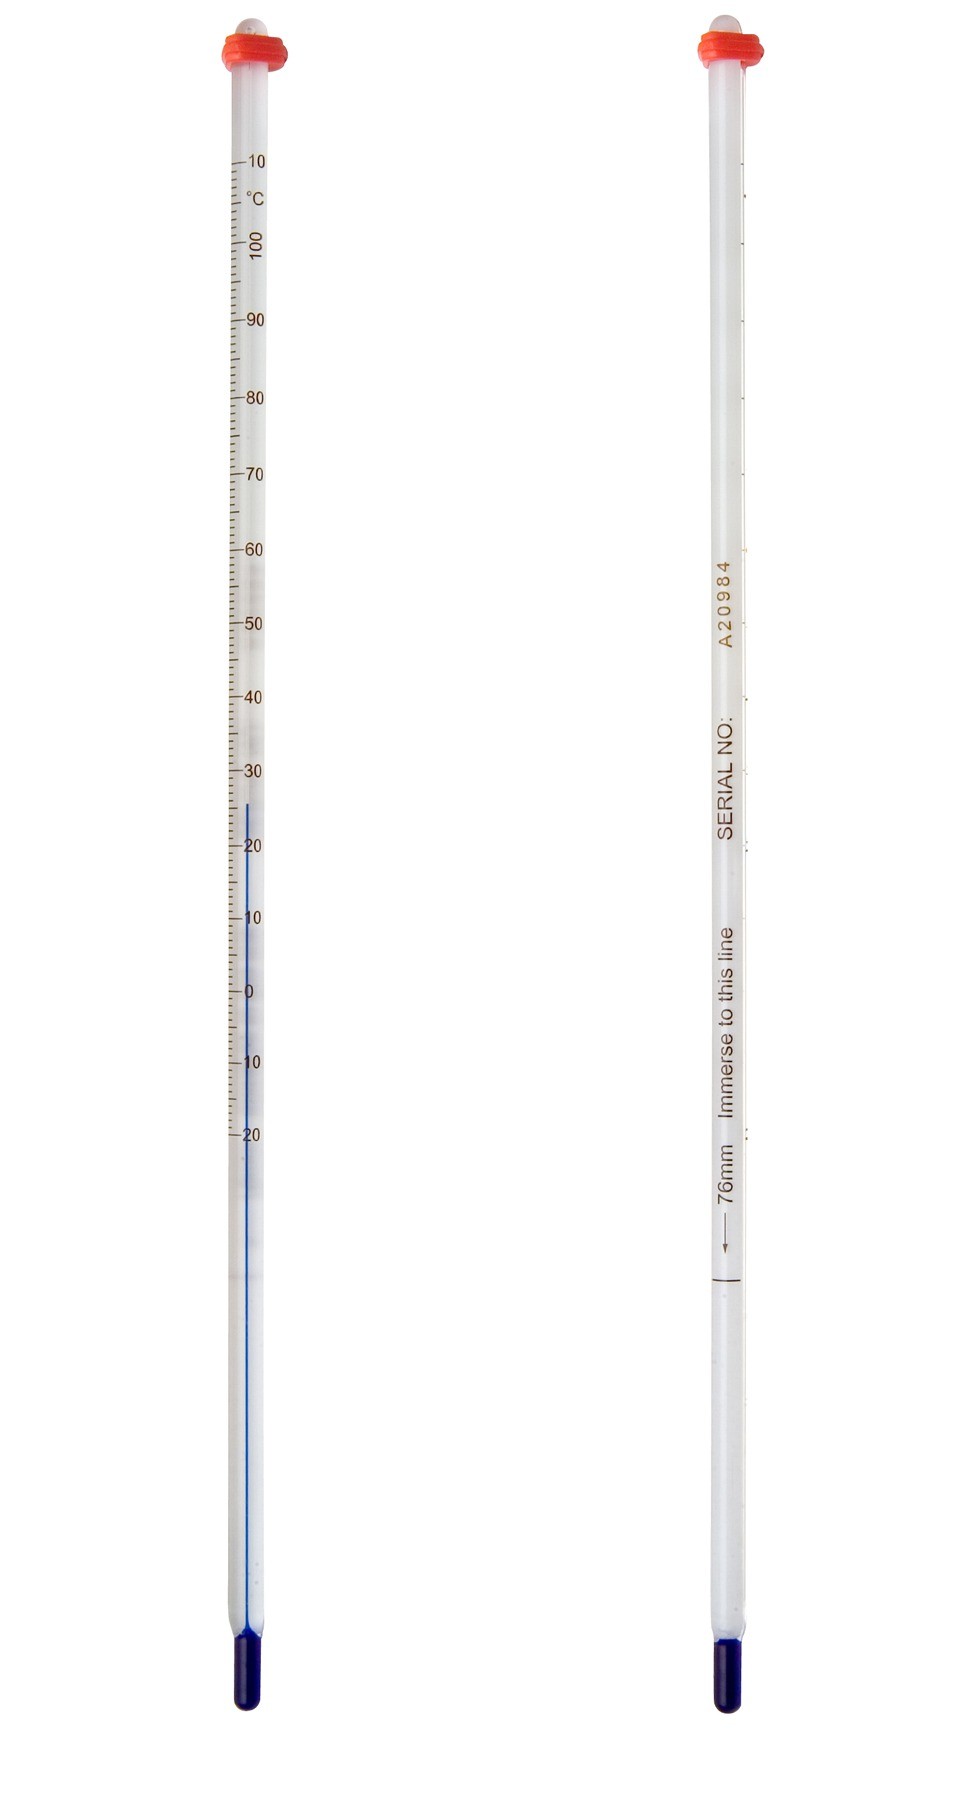 H-B DURAC® Plus™ Ultra Low Liquid-In-Glass Laboratory Thermometers